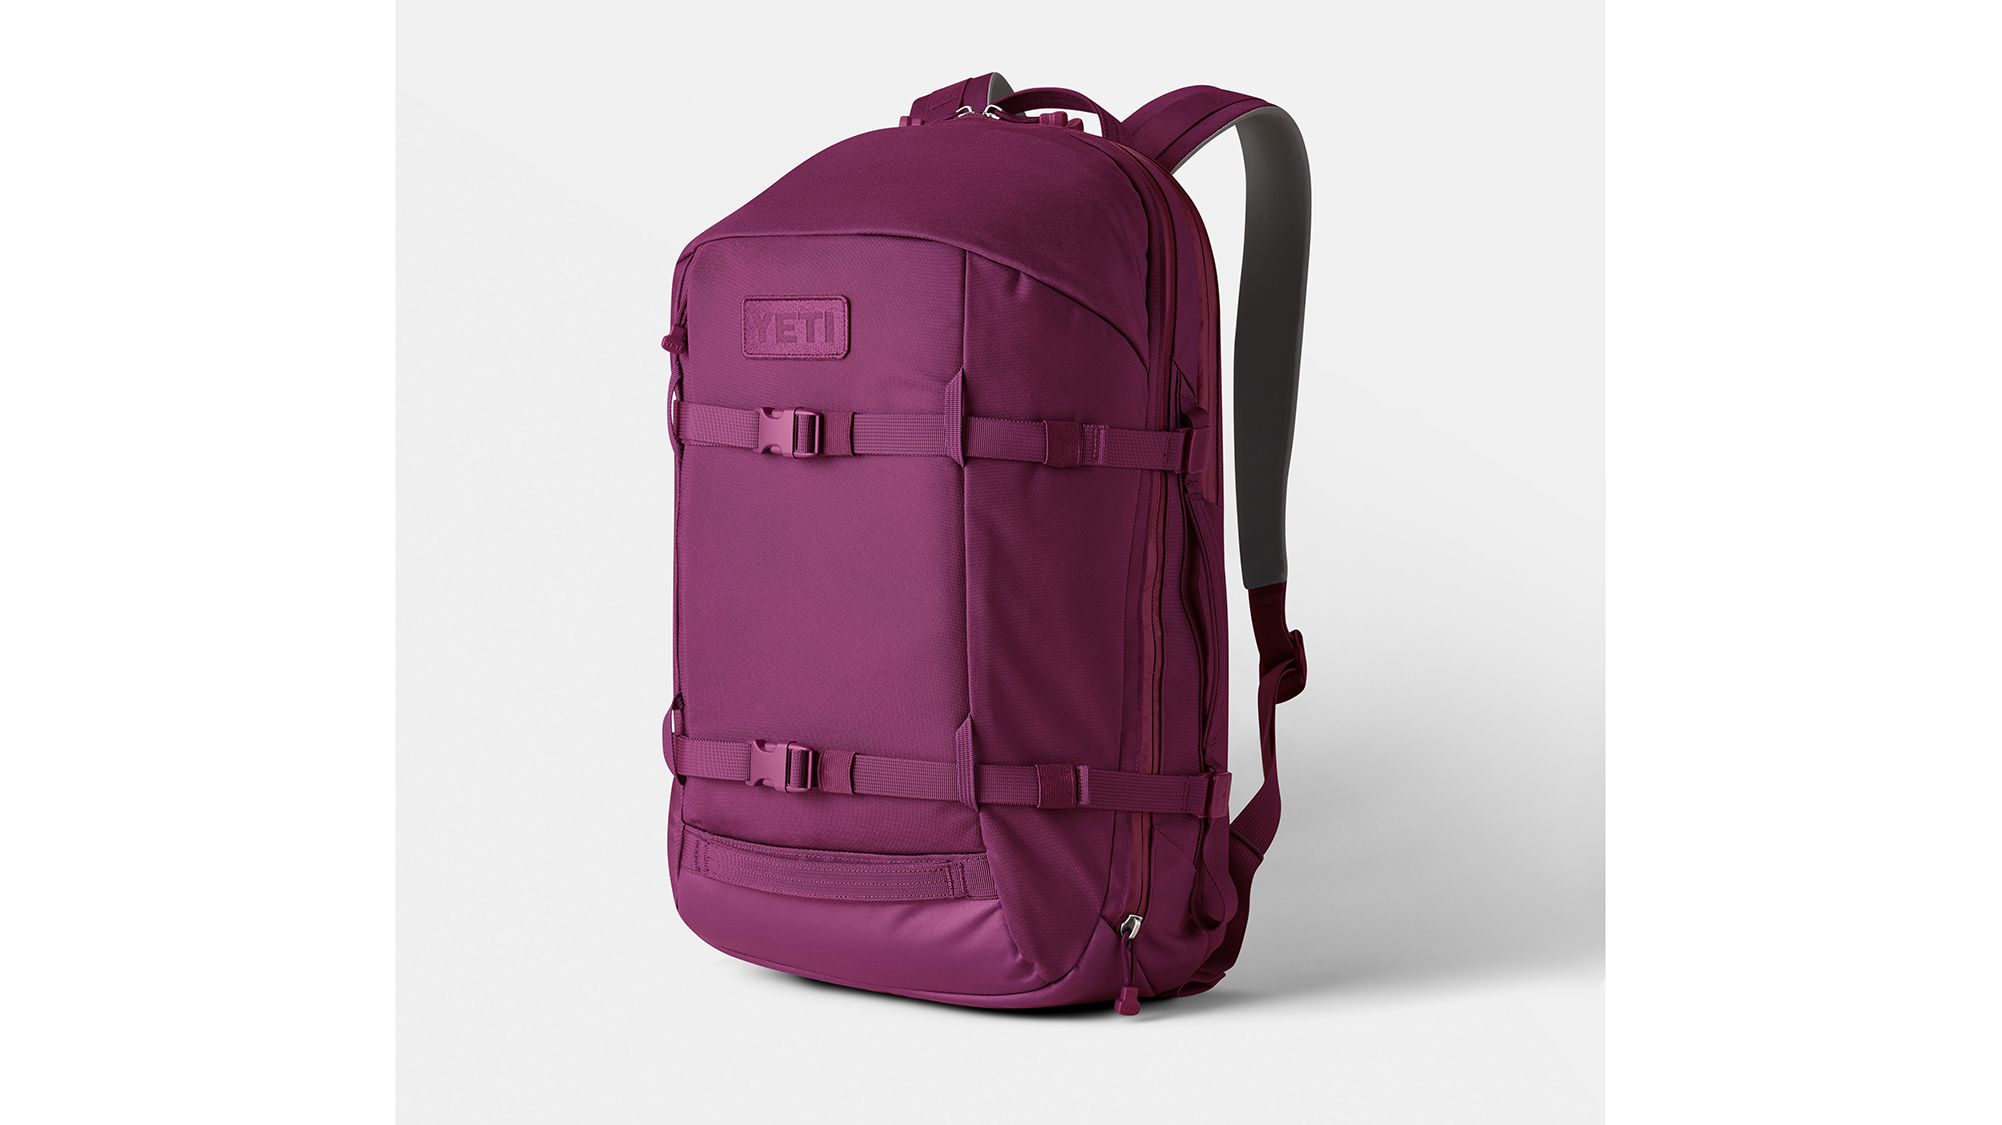 YETI Backpacks & Bags